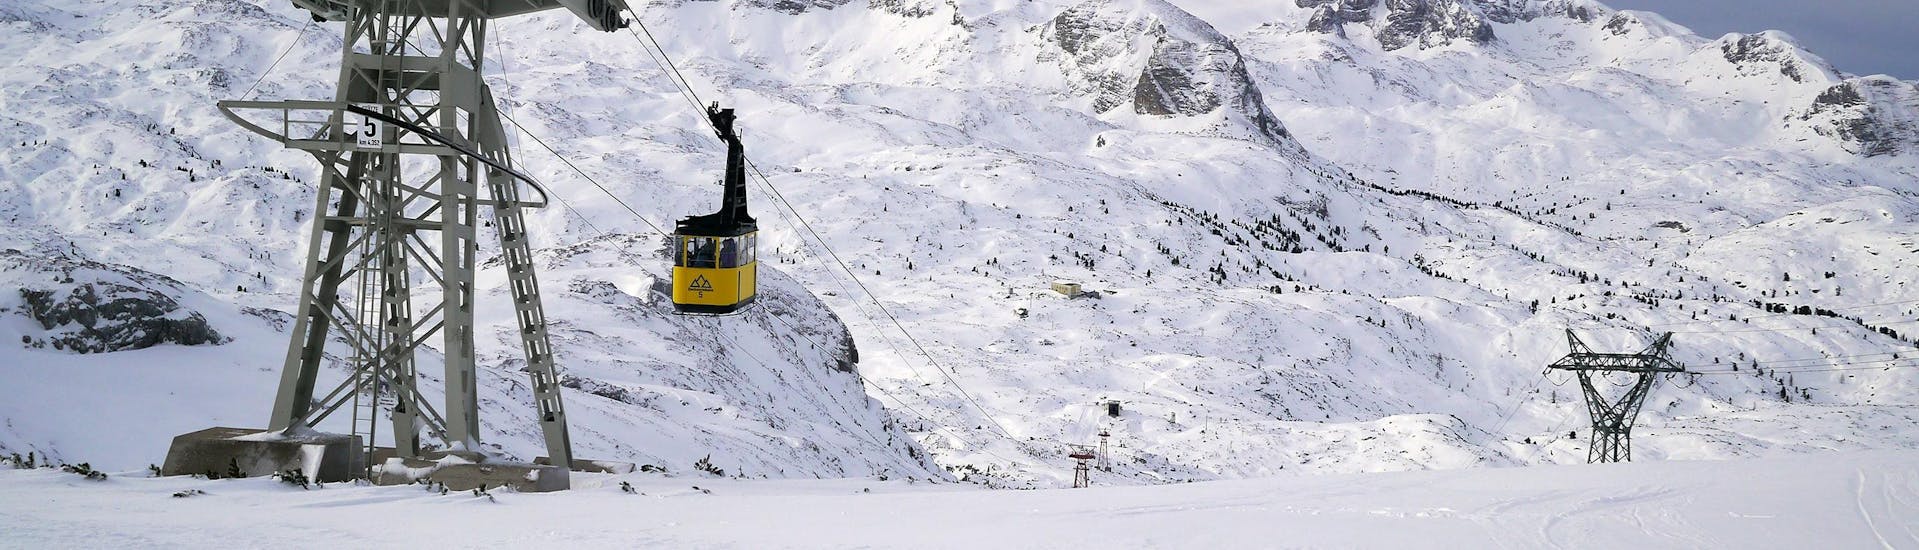 View of the gondola in the snowy Dachstein Krippenstein ski area in Upper Austria, where local ski schools offer their ski courses.